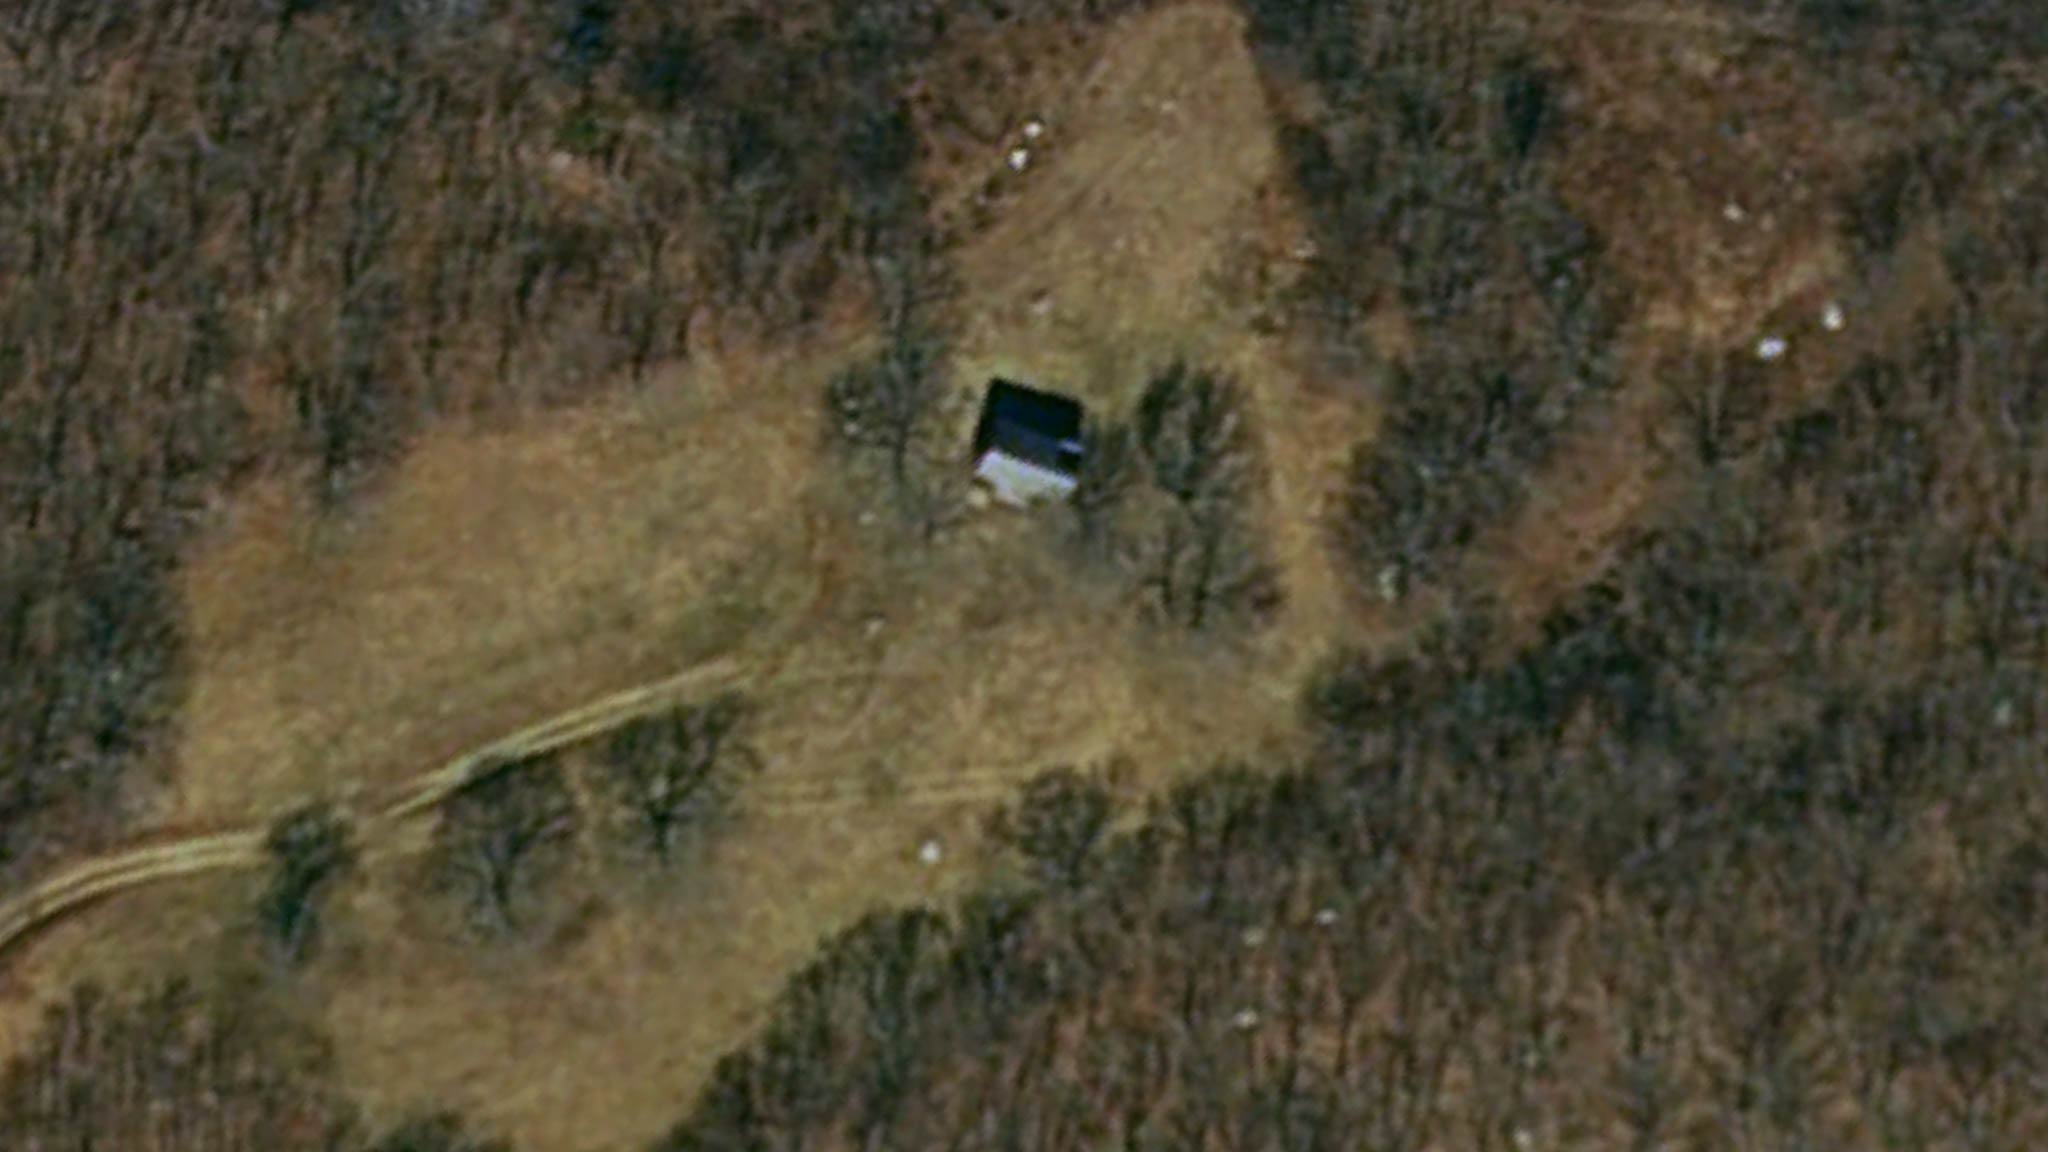 Martha's Vineyard satellite image from 2005 before mansion